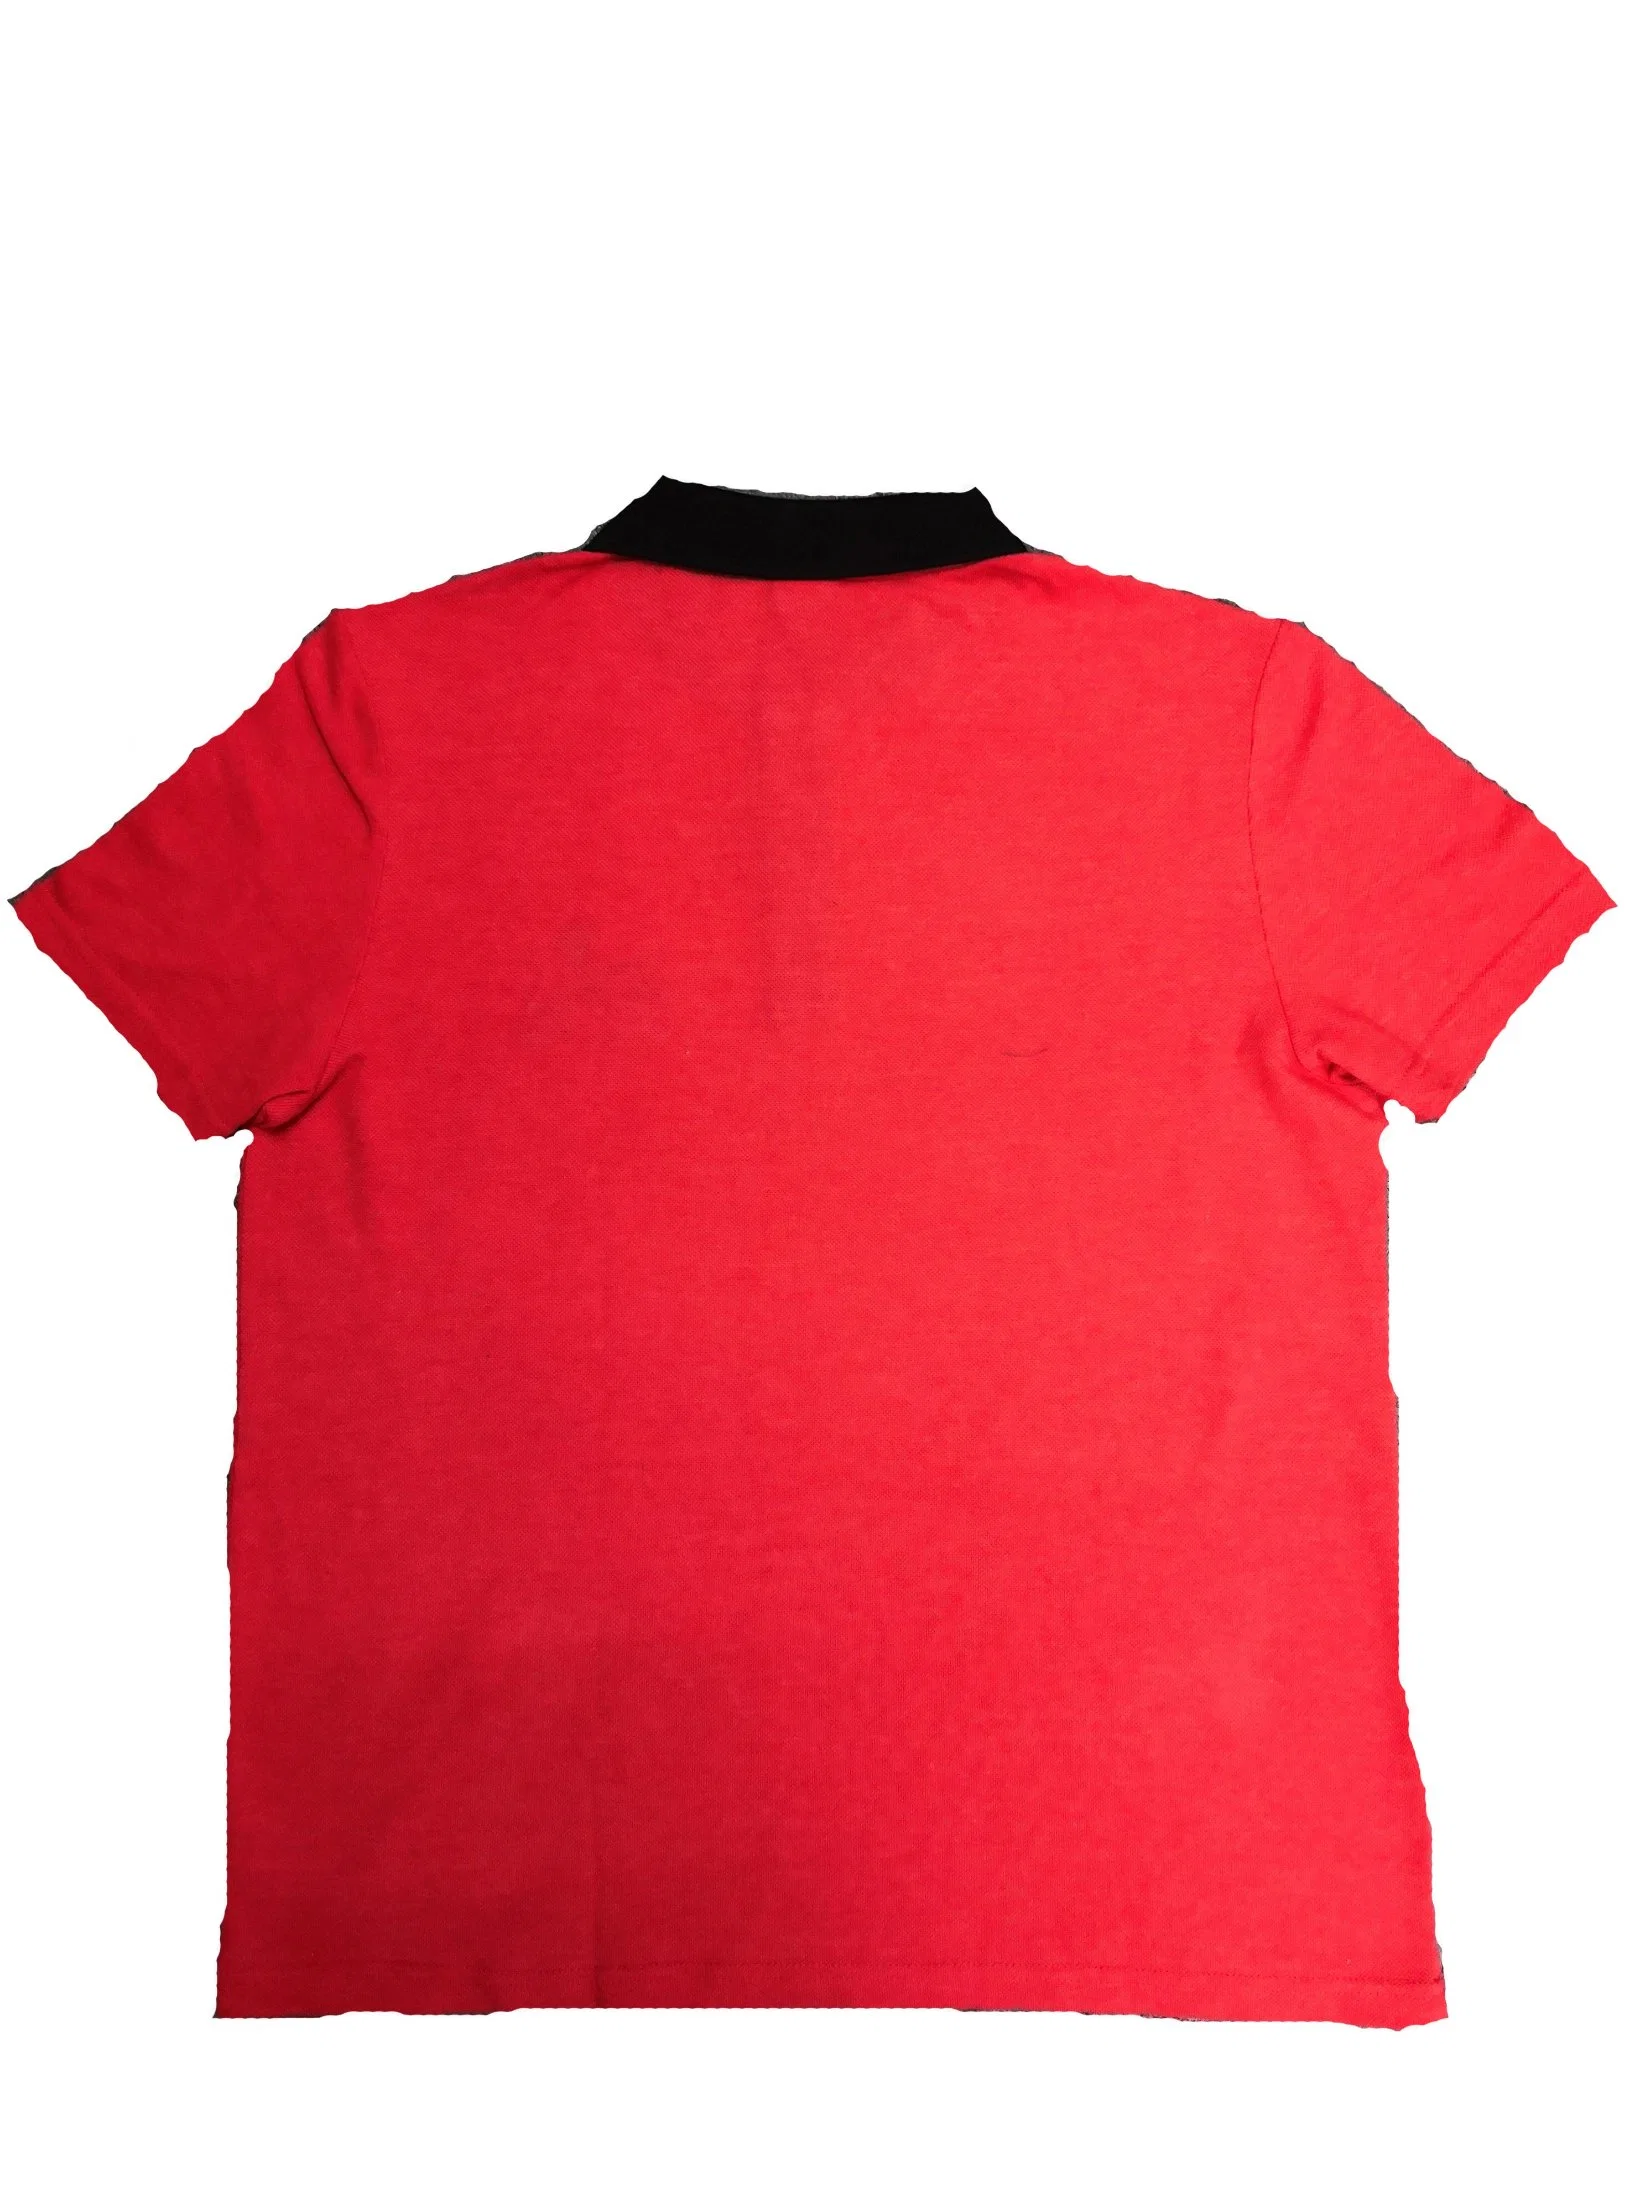 OEM / ODM Polo Shirts Herren Bekleidung Großhandel/Lieferant Polo T-Shirts